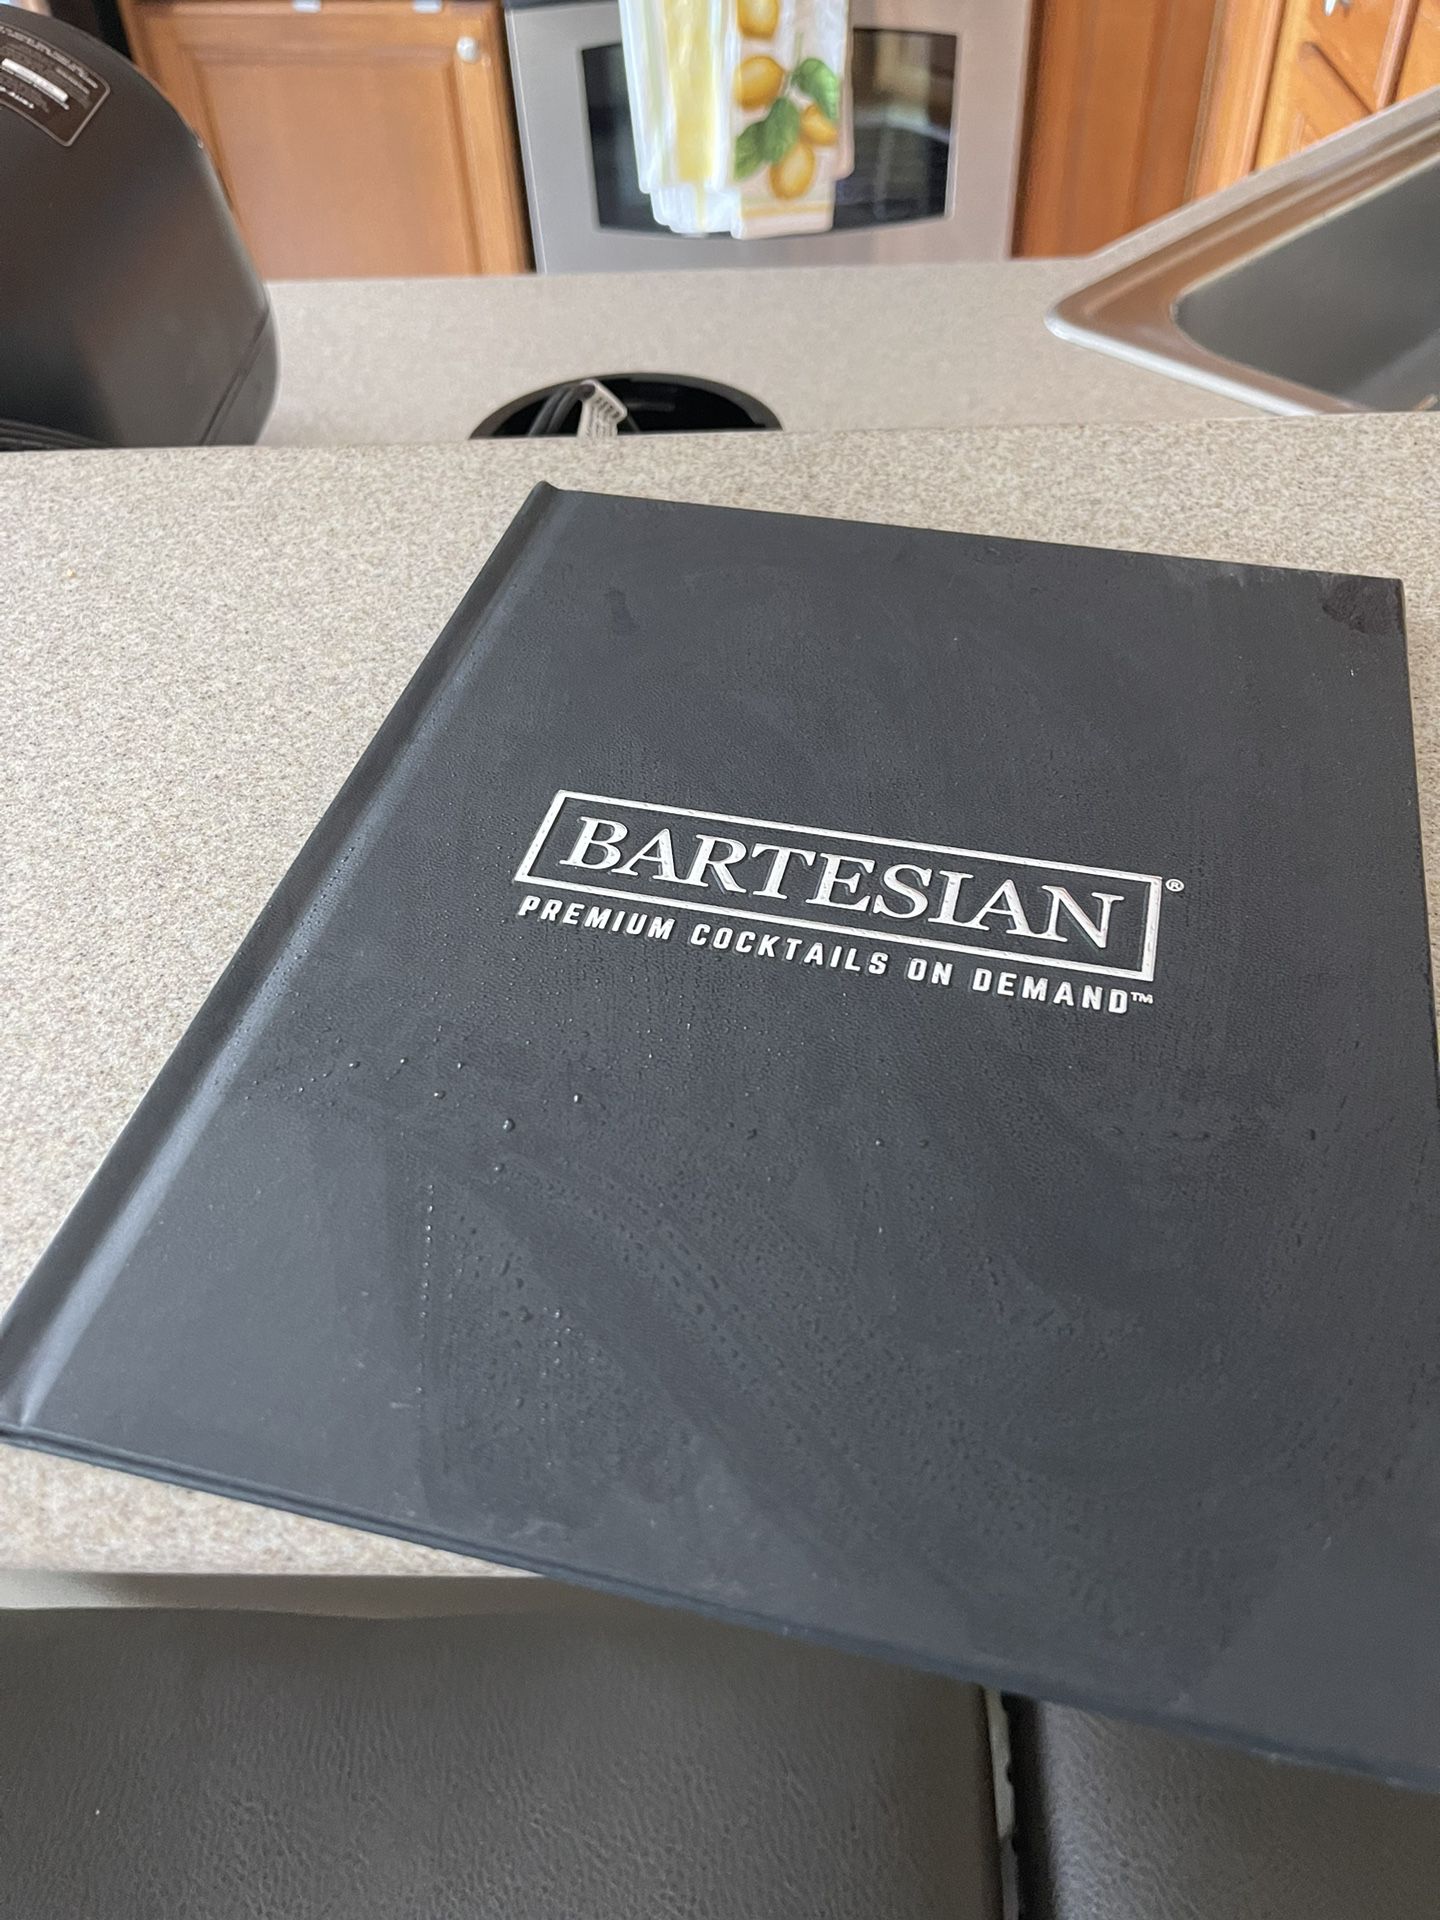 Bartesian cocktail book used